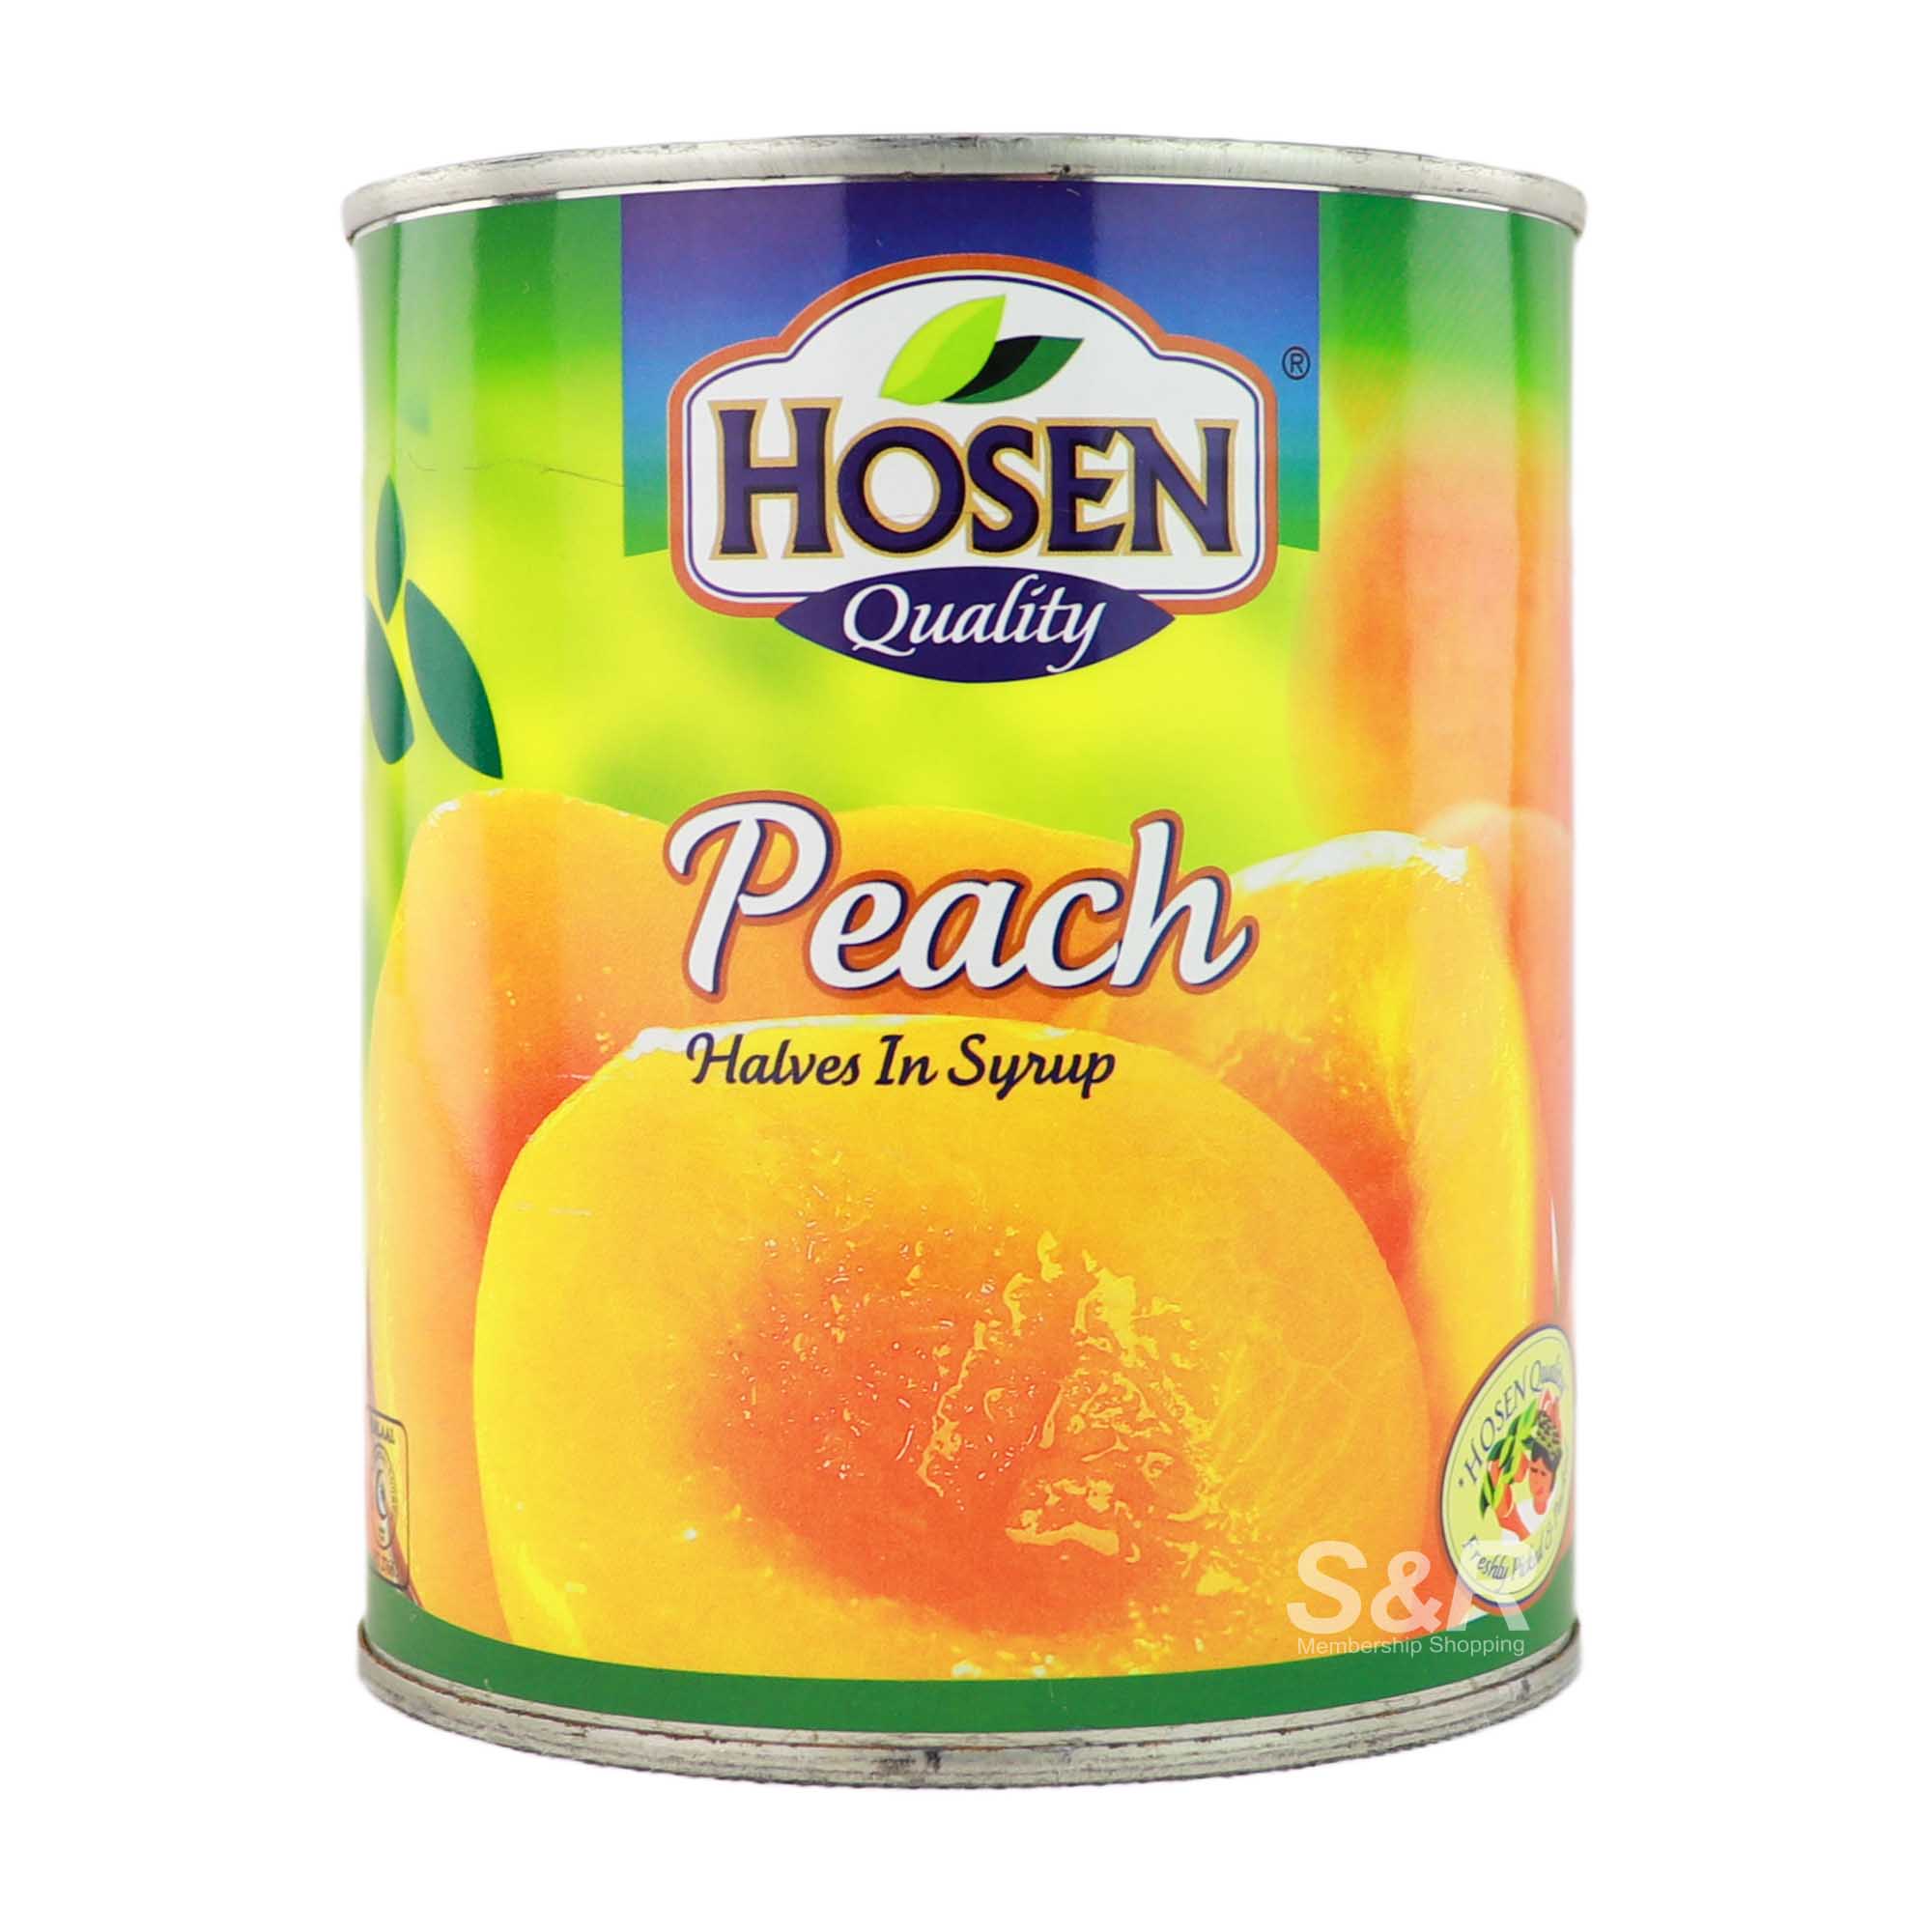 Hosen Quality Peach Halves in Syrup 825g